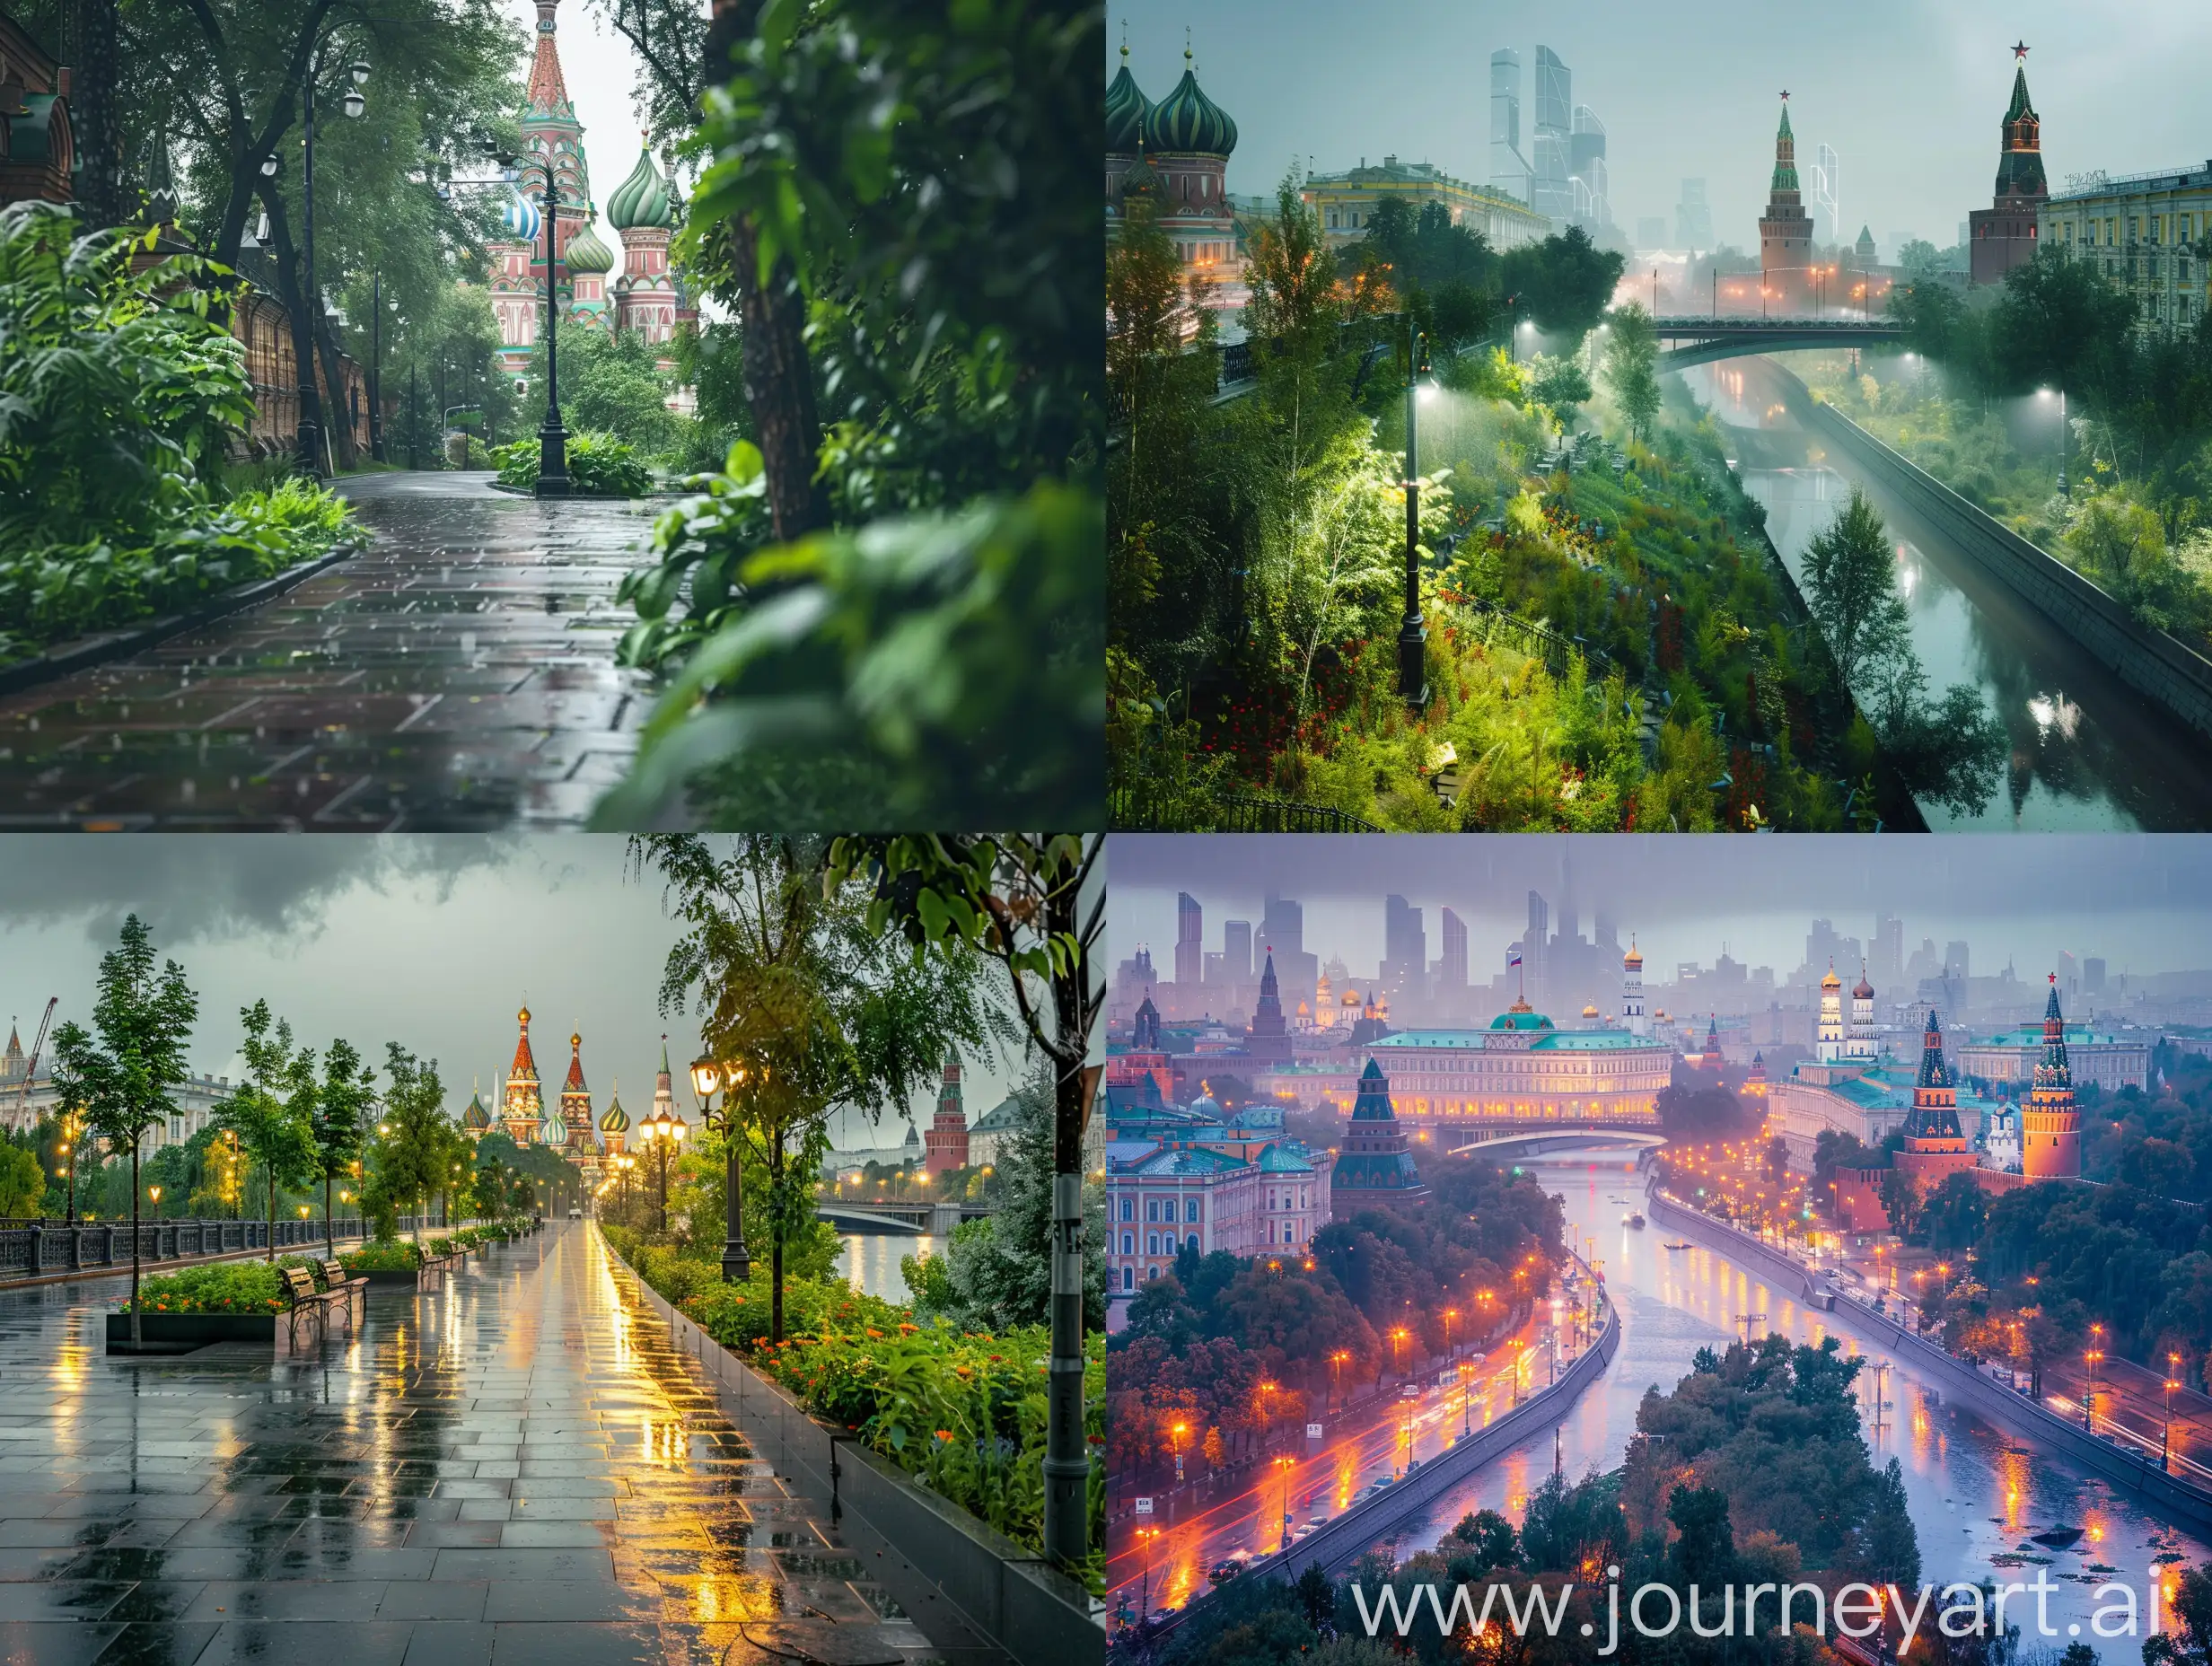 moscow city, soft lighting, daytime, rainy, lush eco system,

